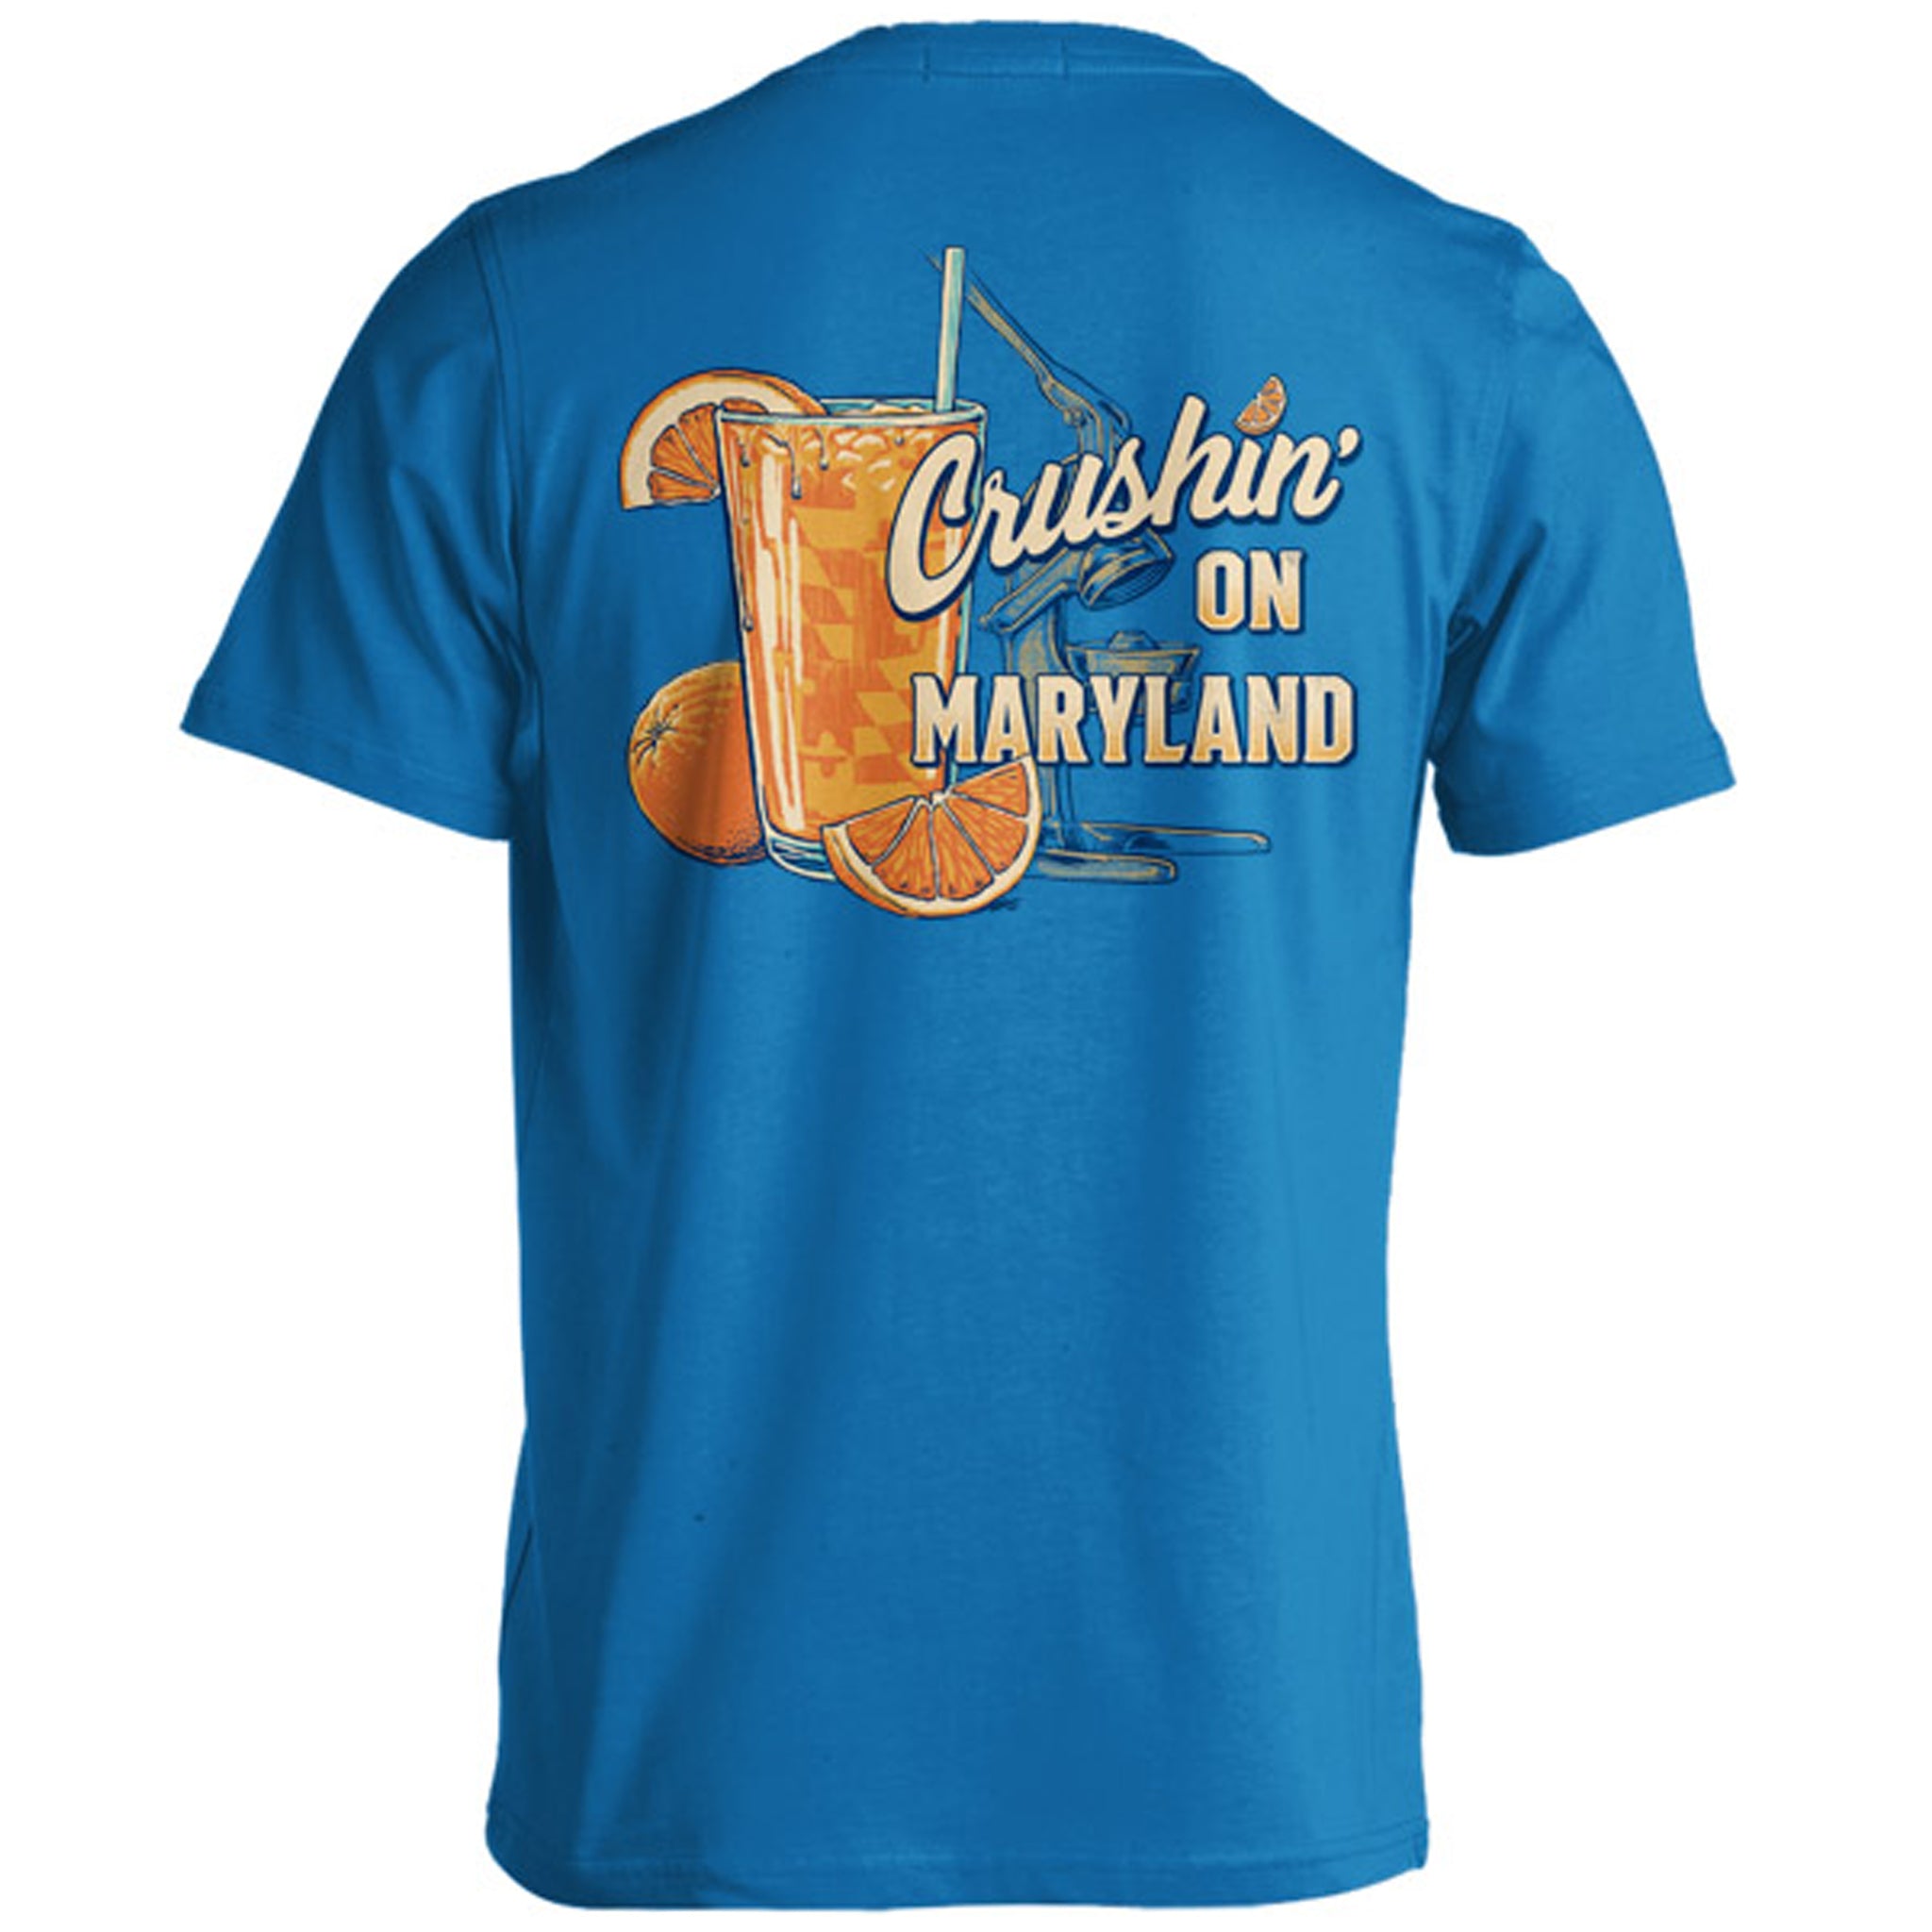 Crushin' on Maryland Orange Crush Blue T-Shirt Medium